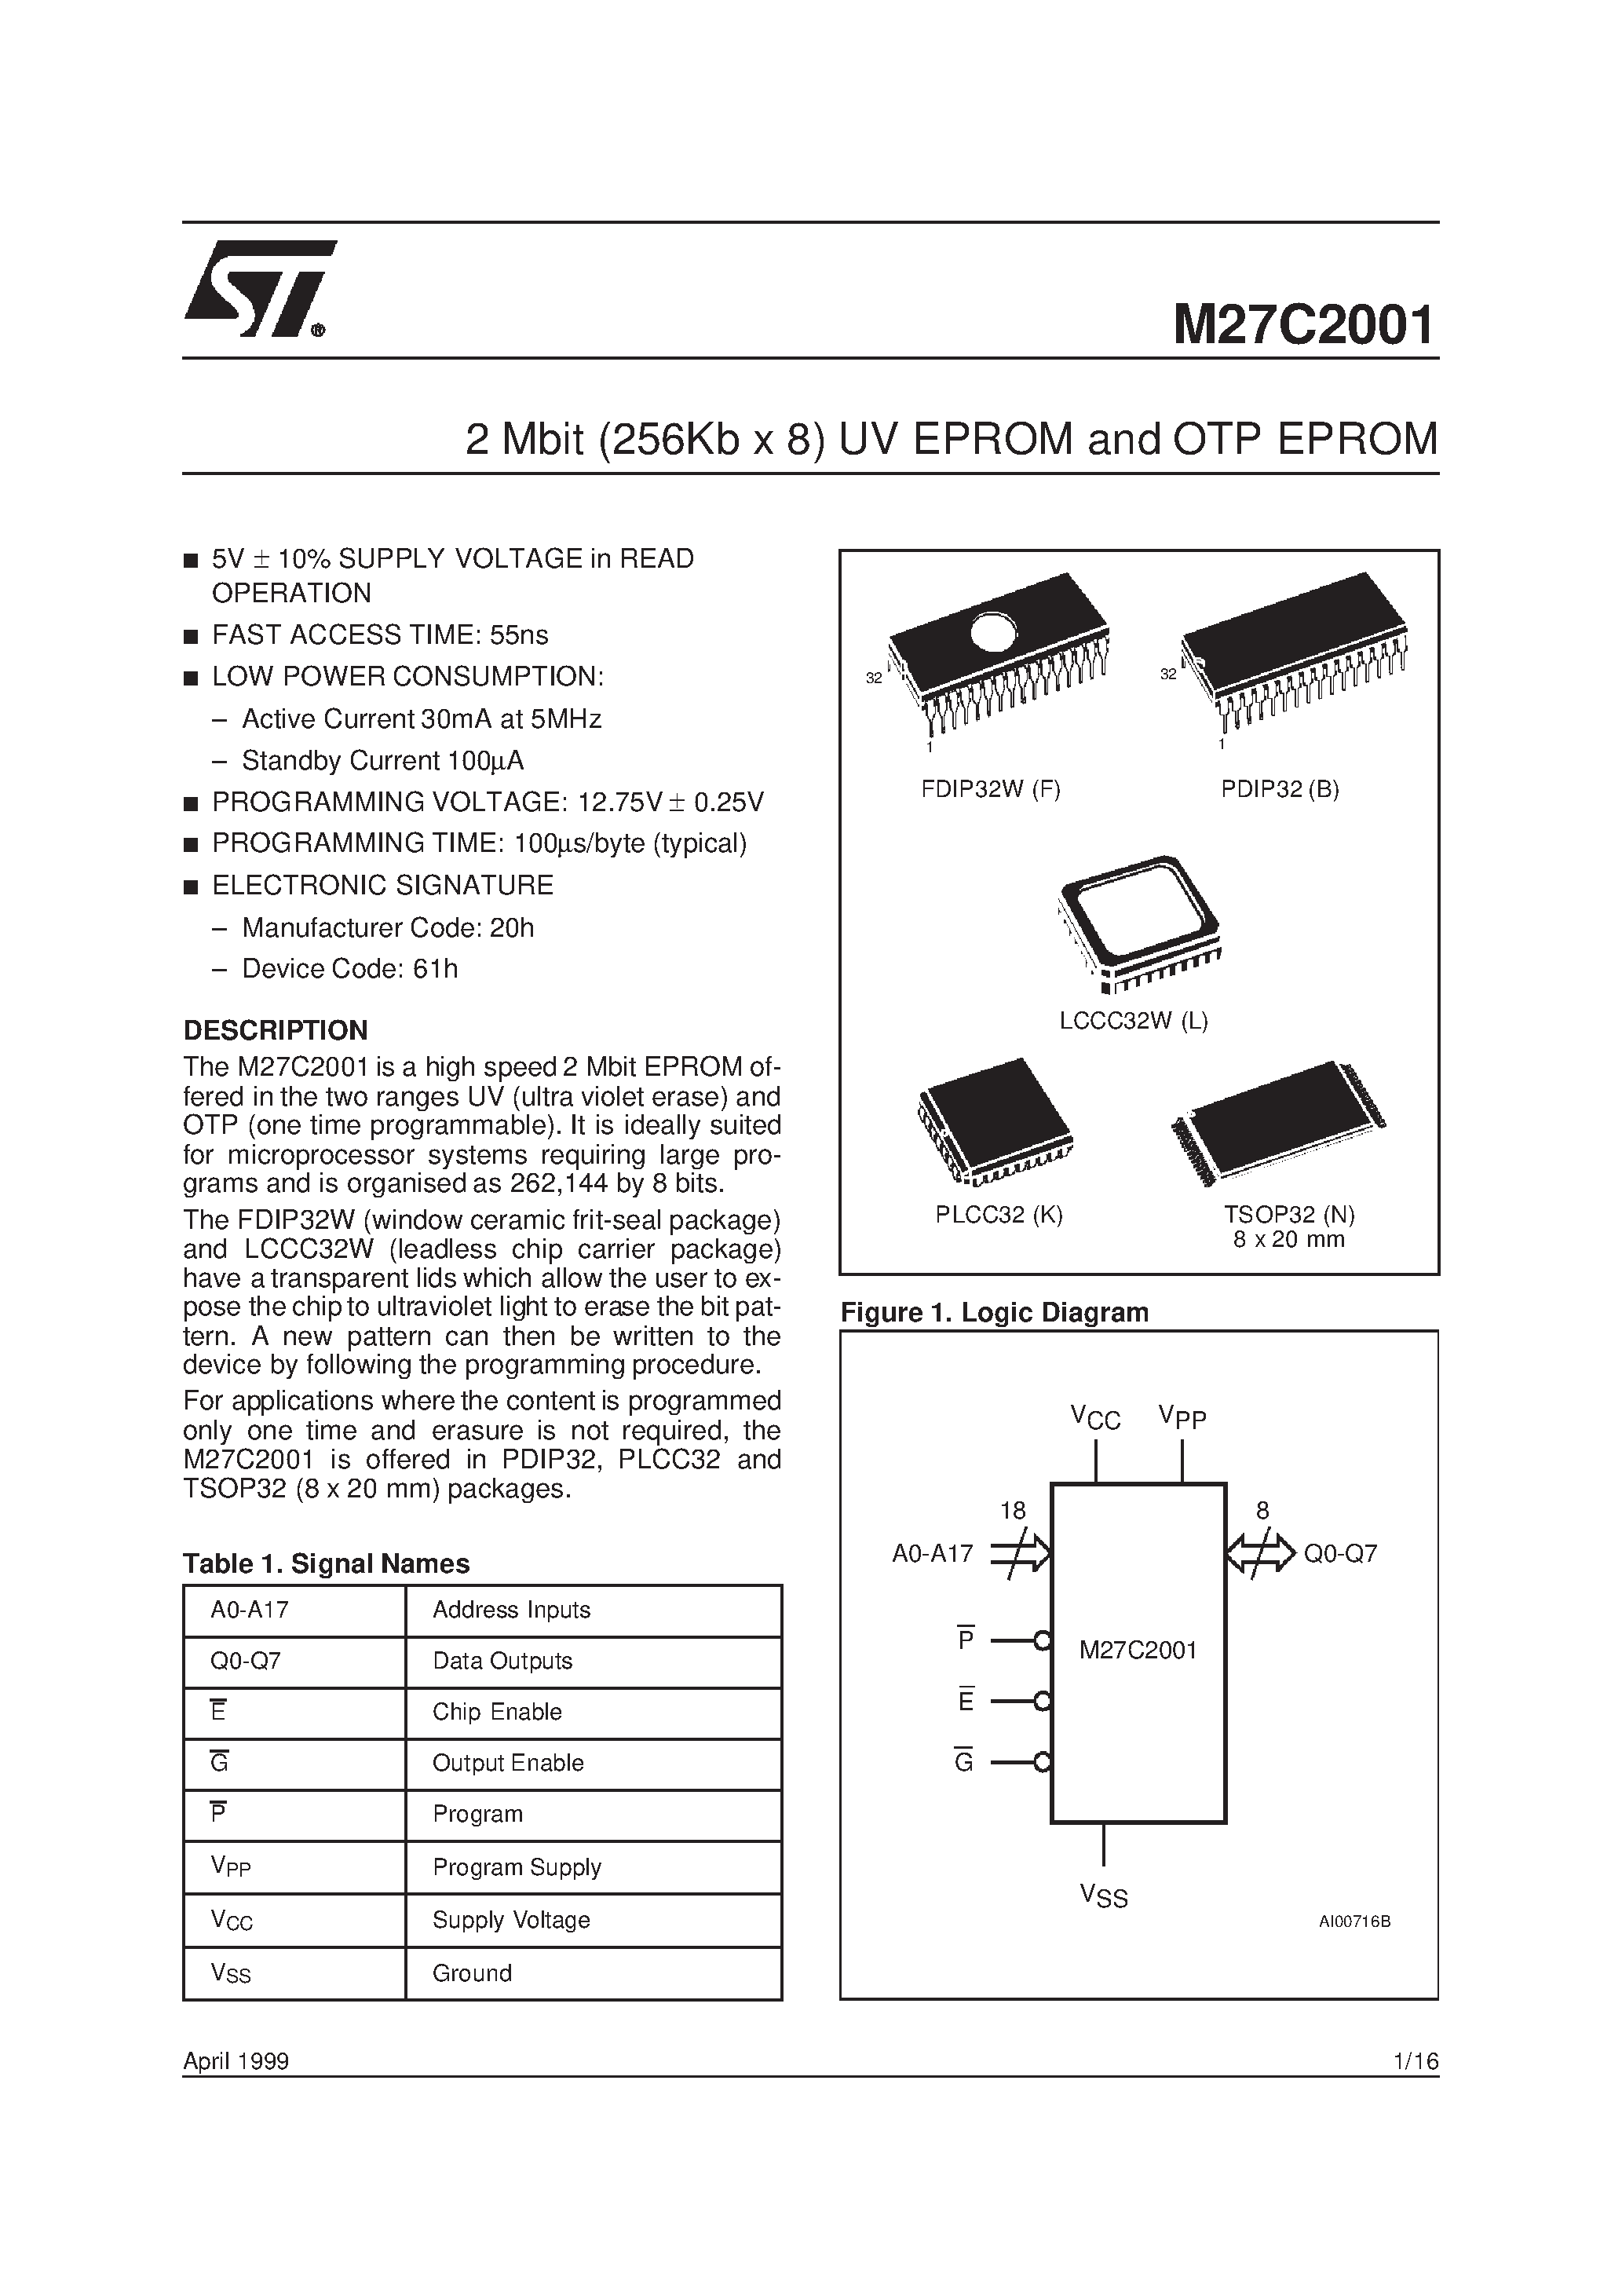 Datasheet M27C2001-10B1TR - 2 Mbit 256Kb x 8 UV EPROM and OTP EPROM page 1